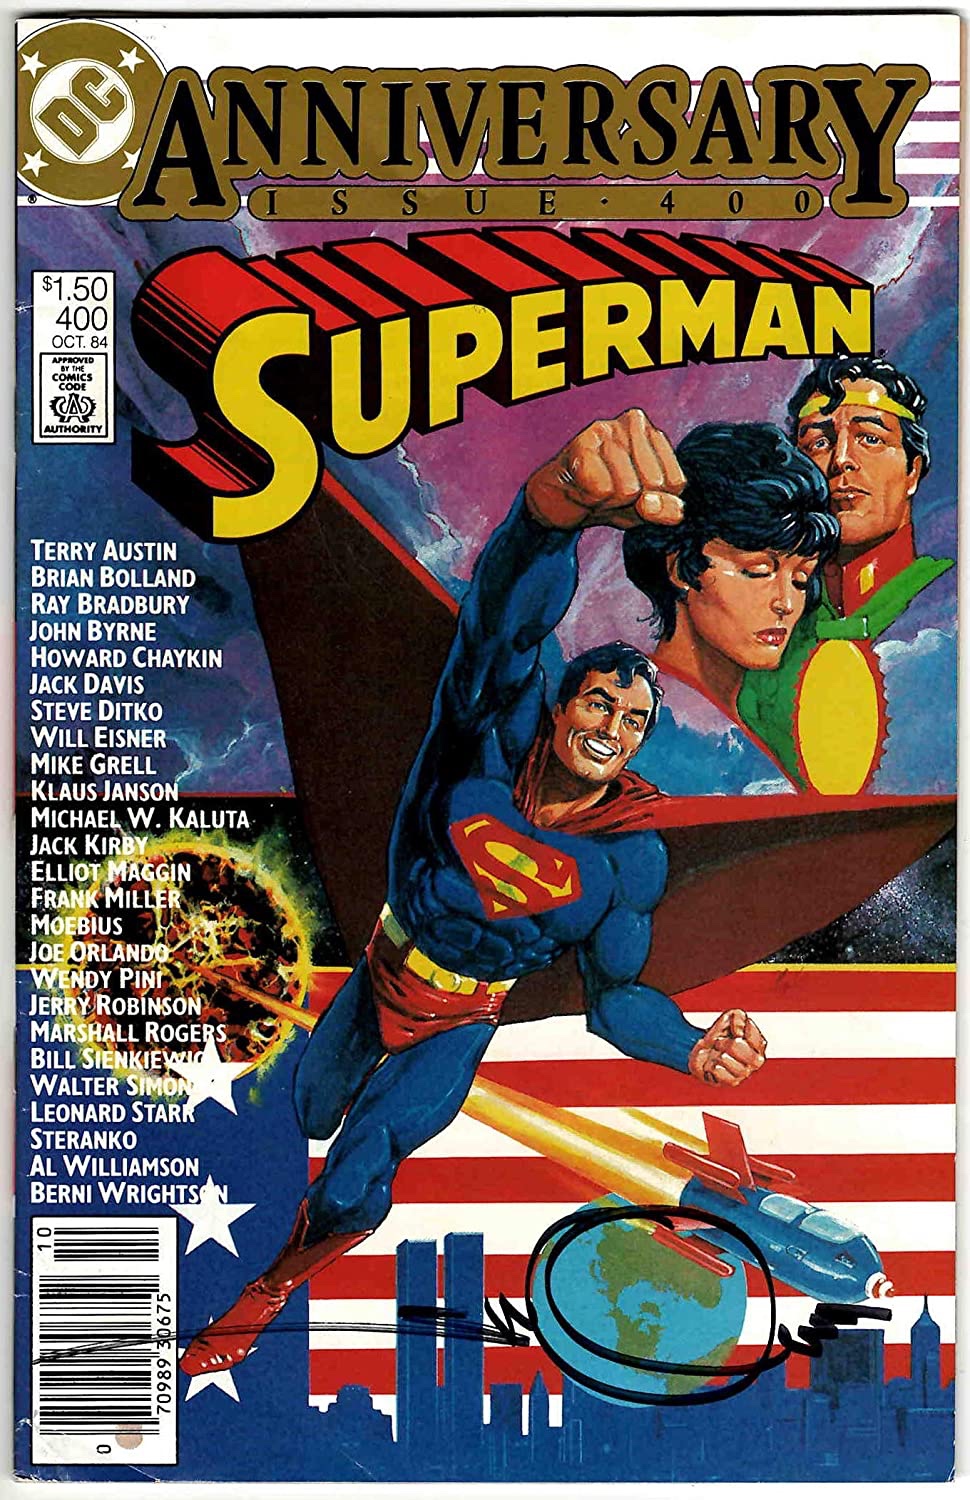 Superman #400, cover by Howard Chaykin